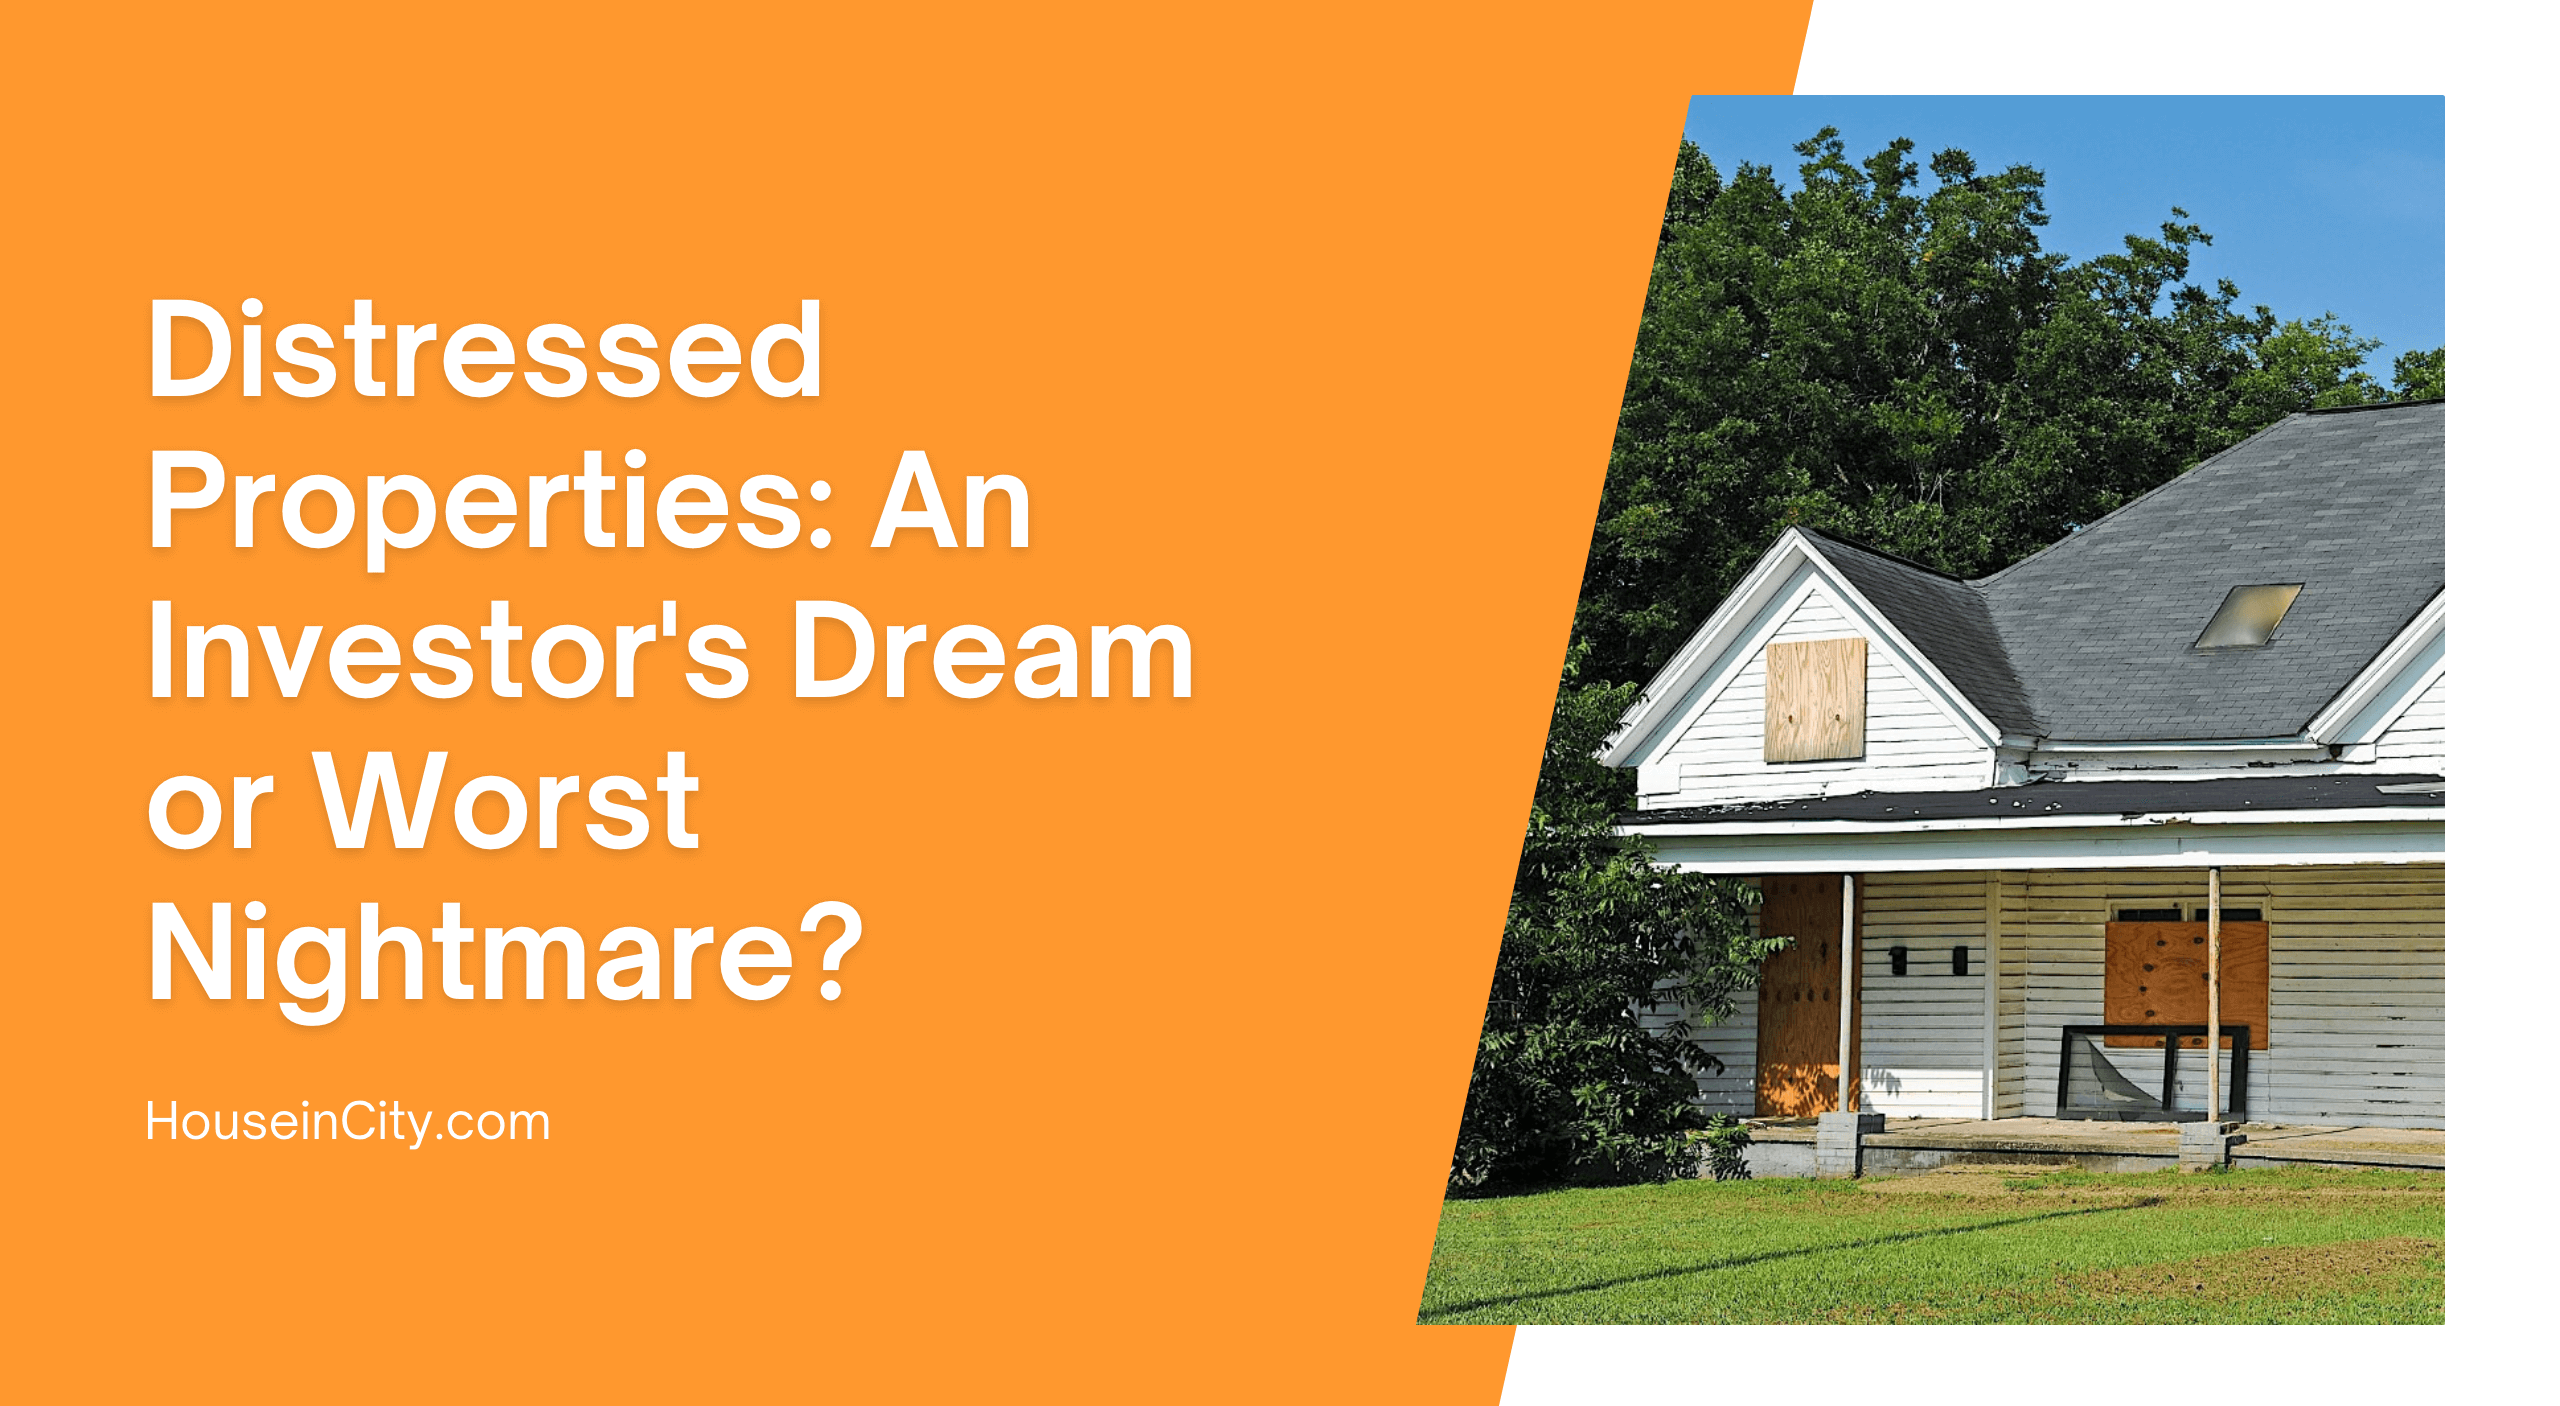 Distressed Properties: An Investor's Dream or Worst Nightmare?